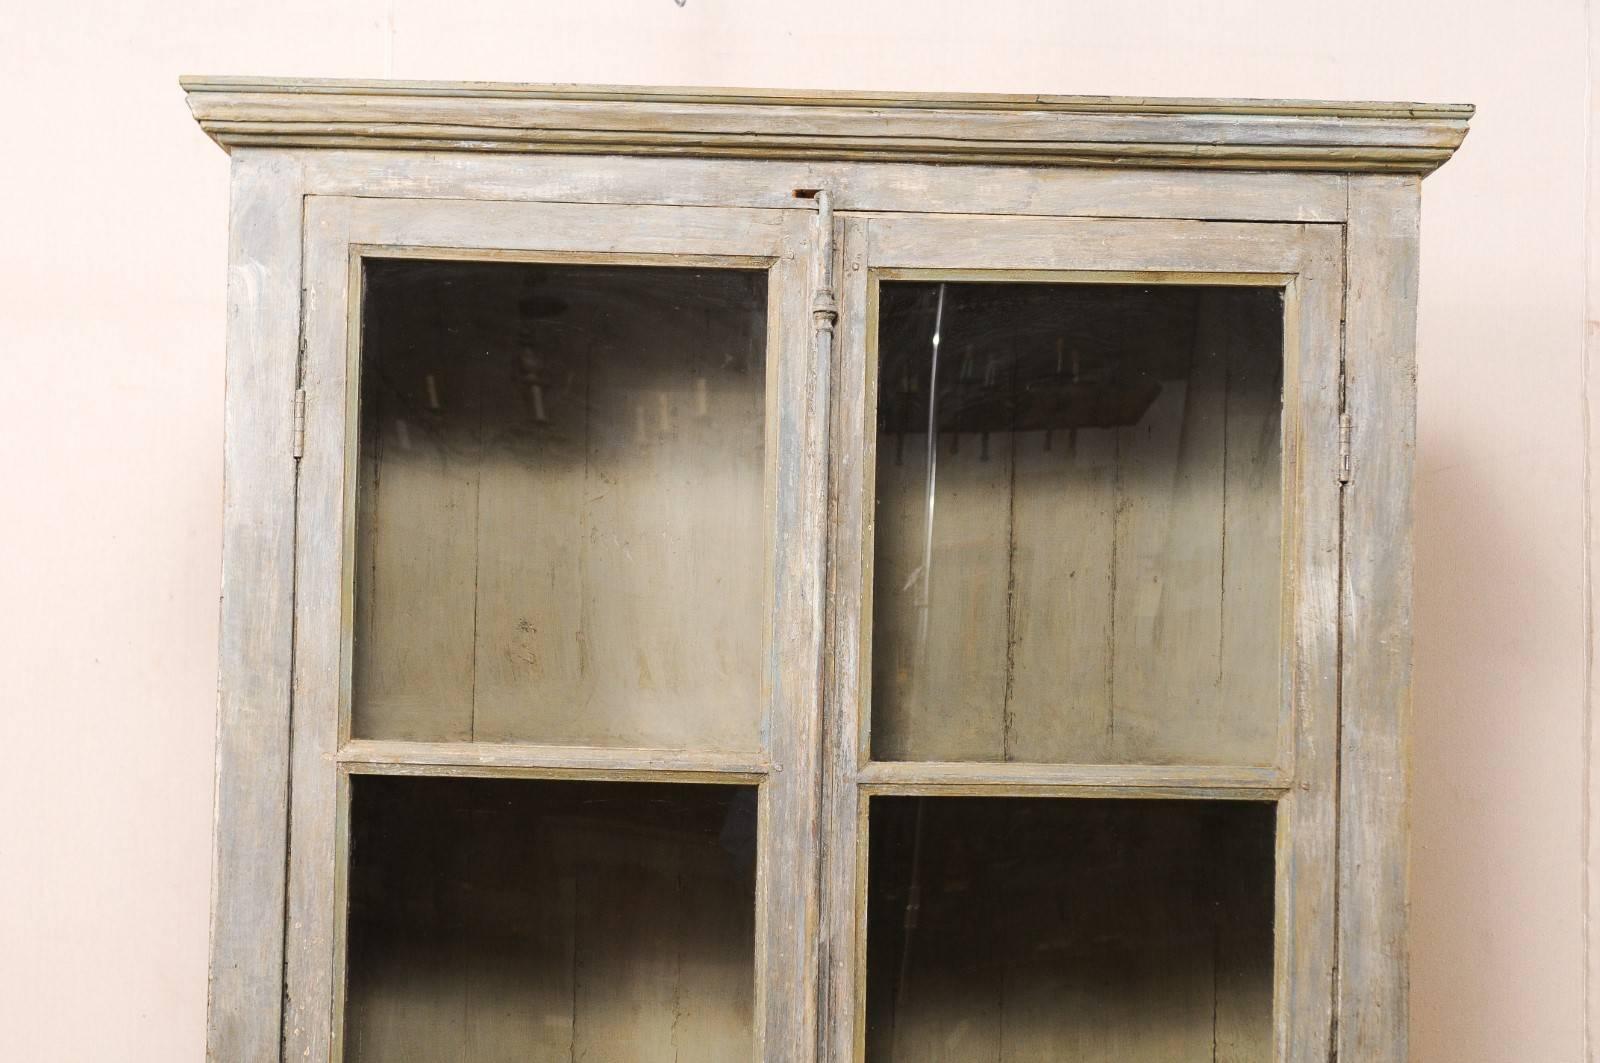 rustic wood display cabinet